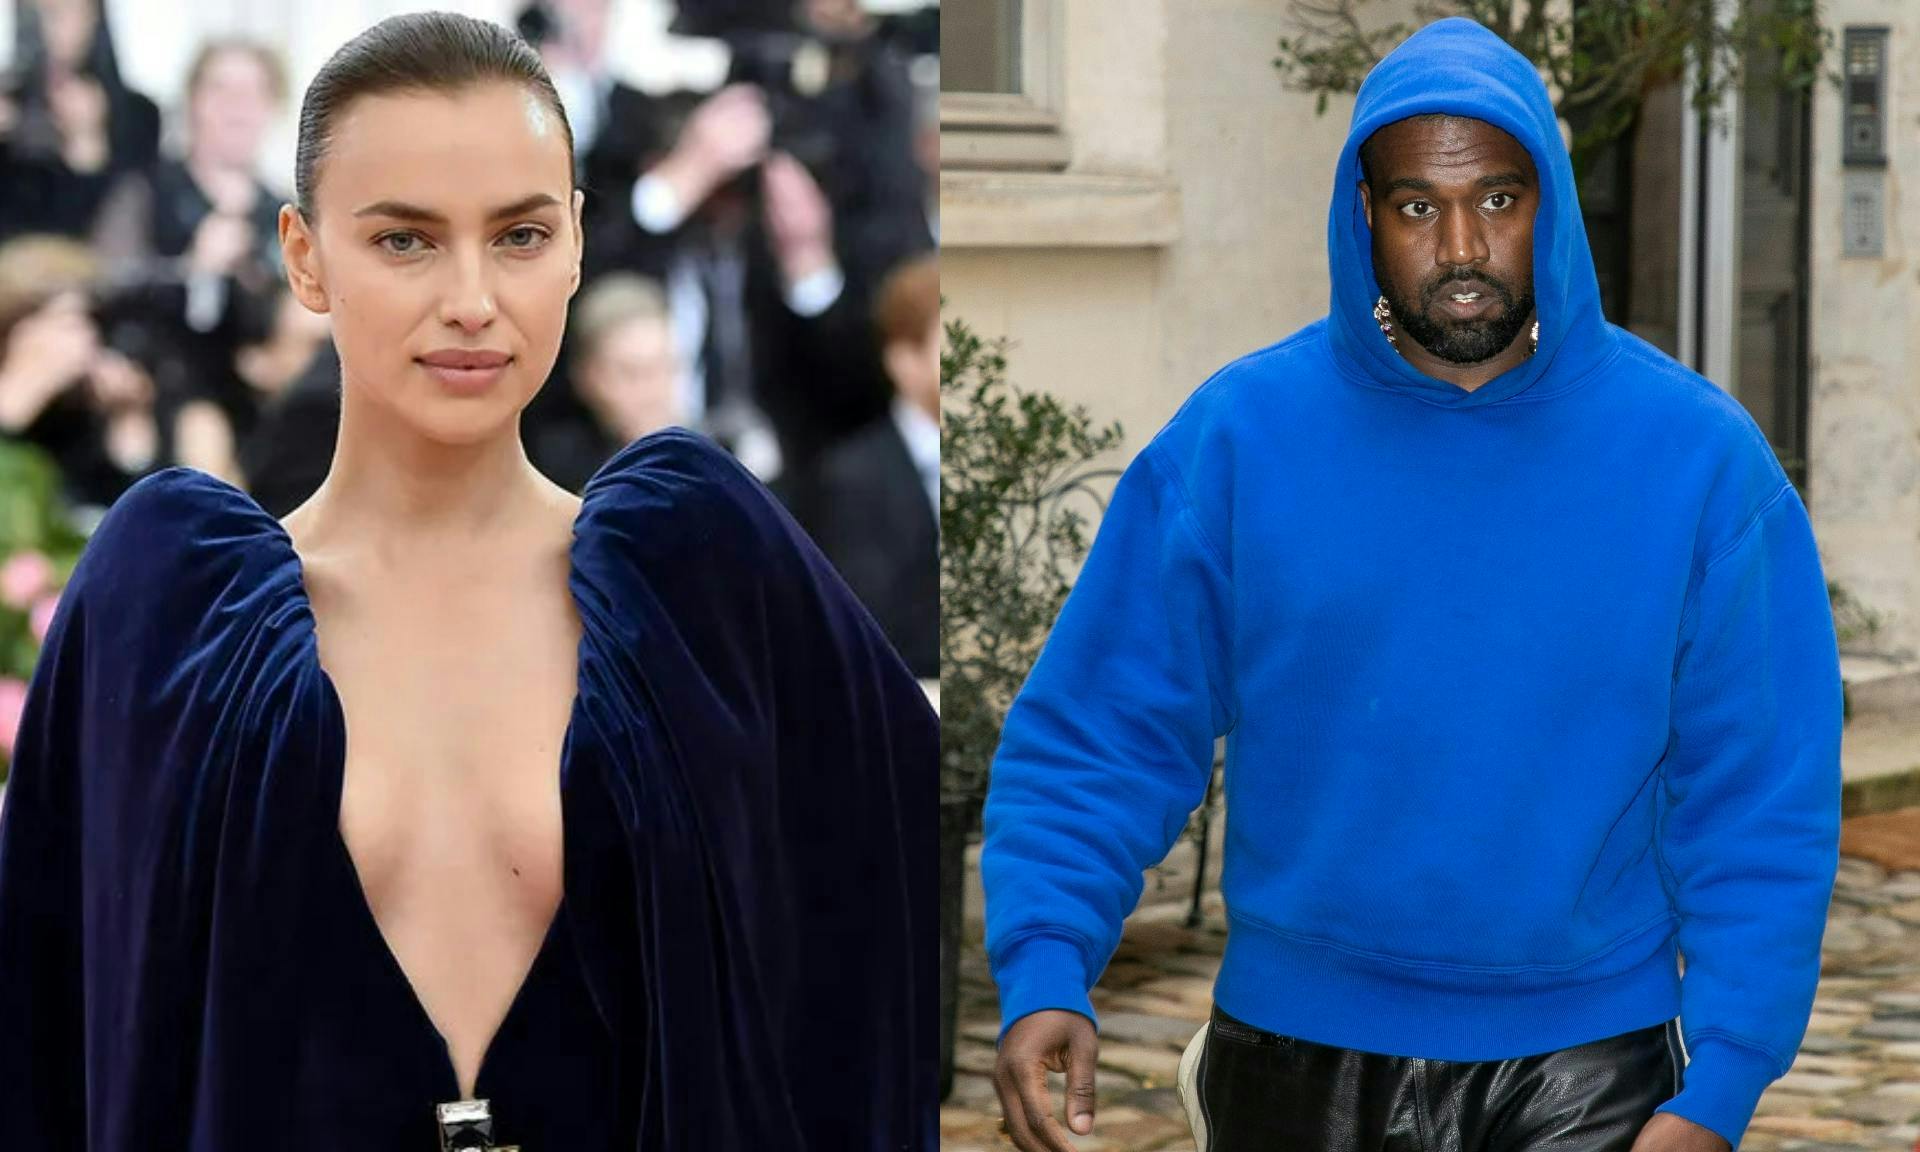 Irina Shayk et Kanye West sortent-ils ensemble ?